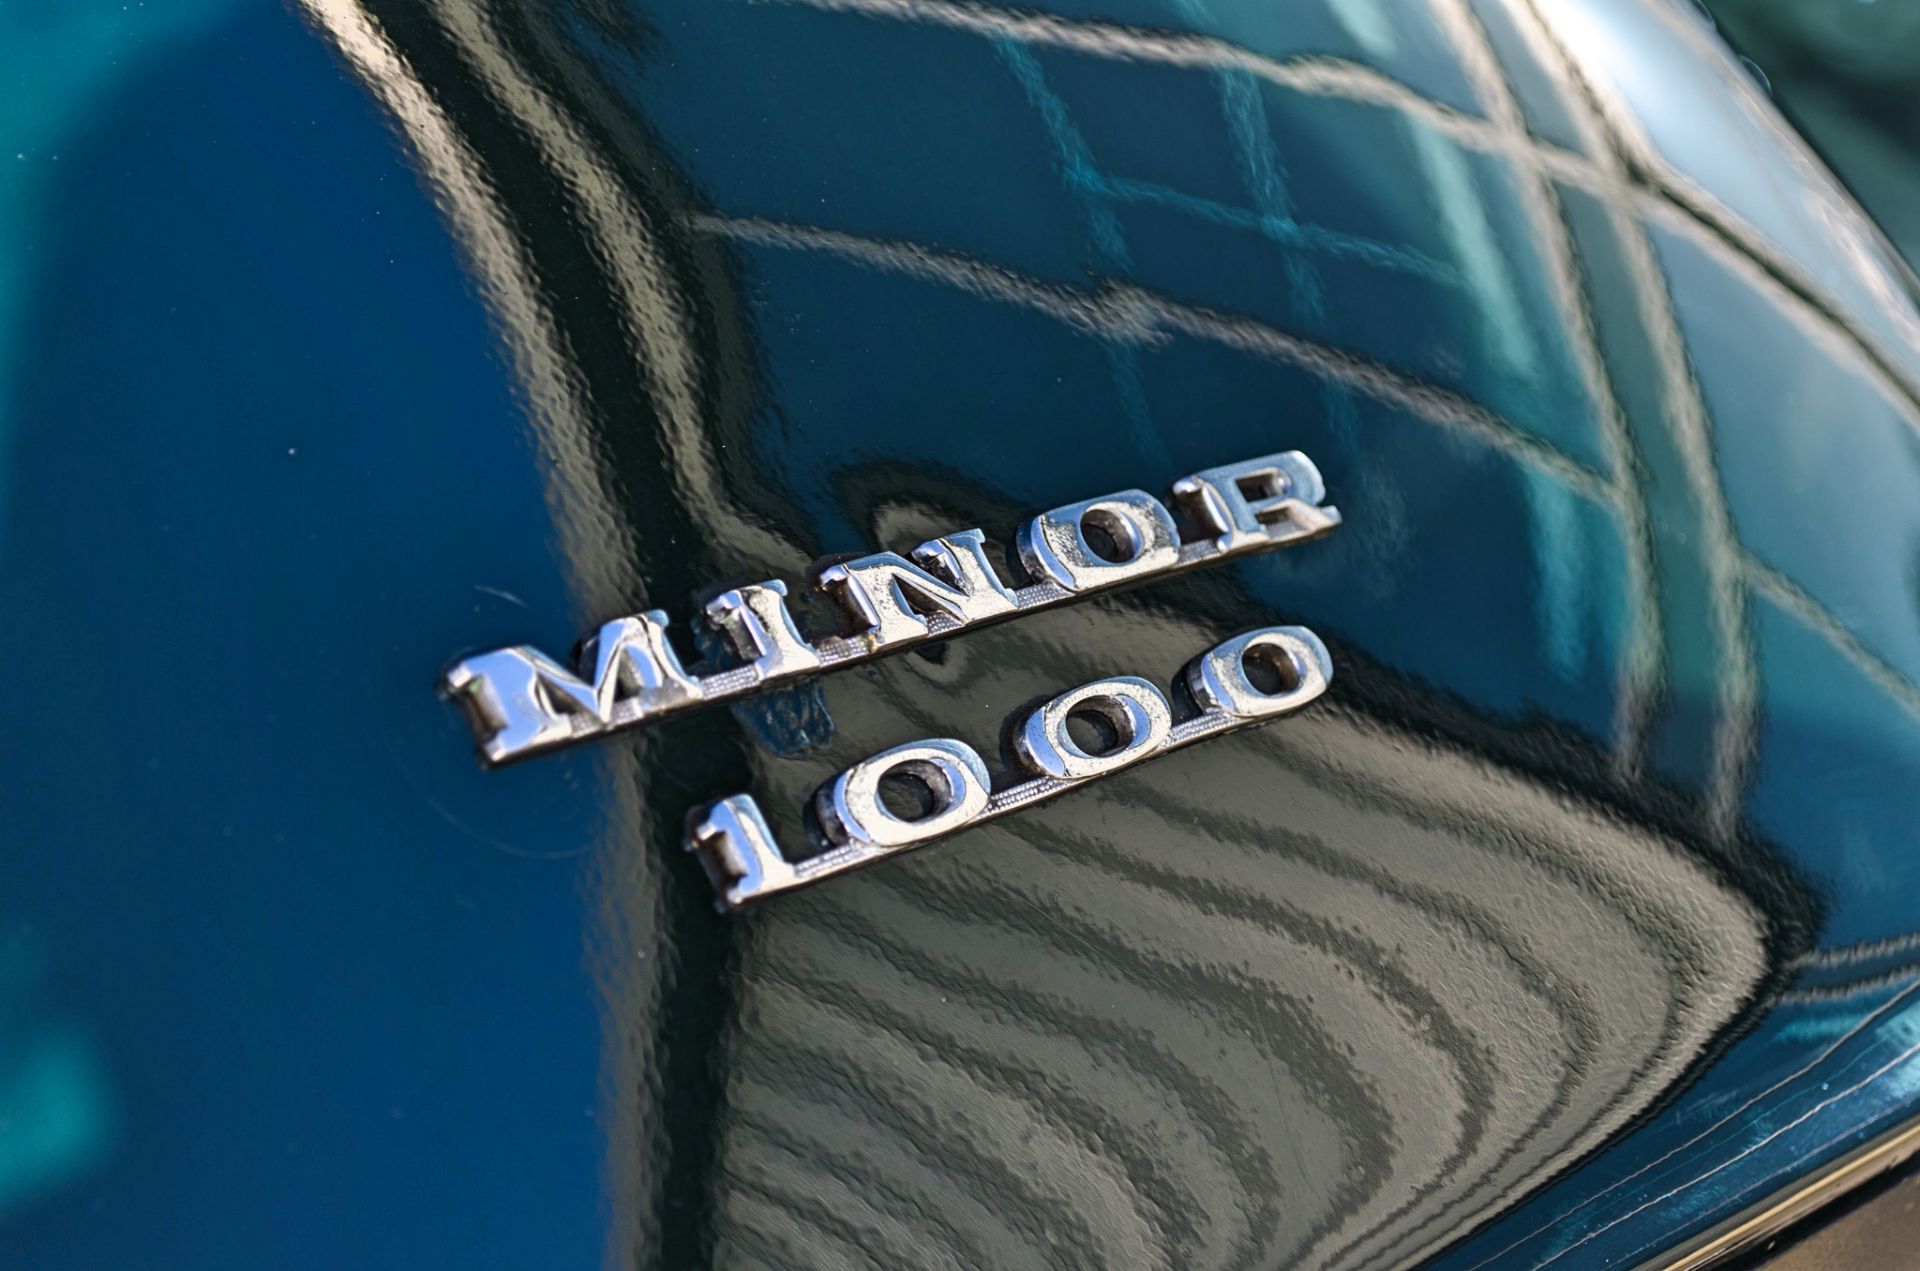 1968 Morris Minor 1000 1098cc series V 2 door convertible - Image 53 of 58